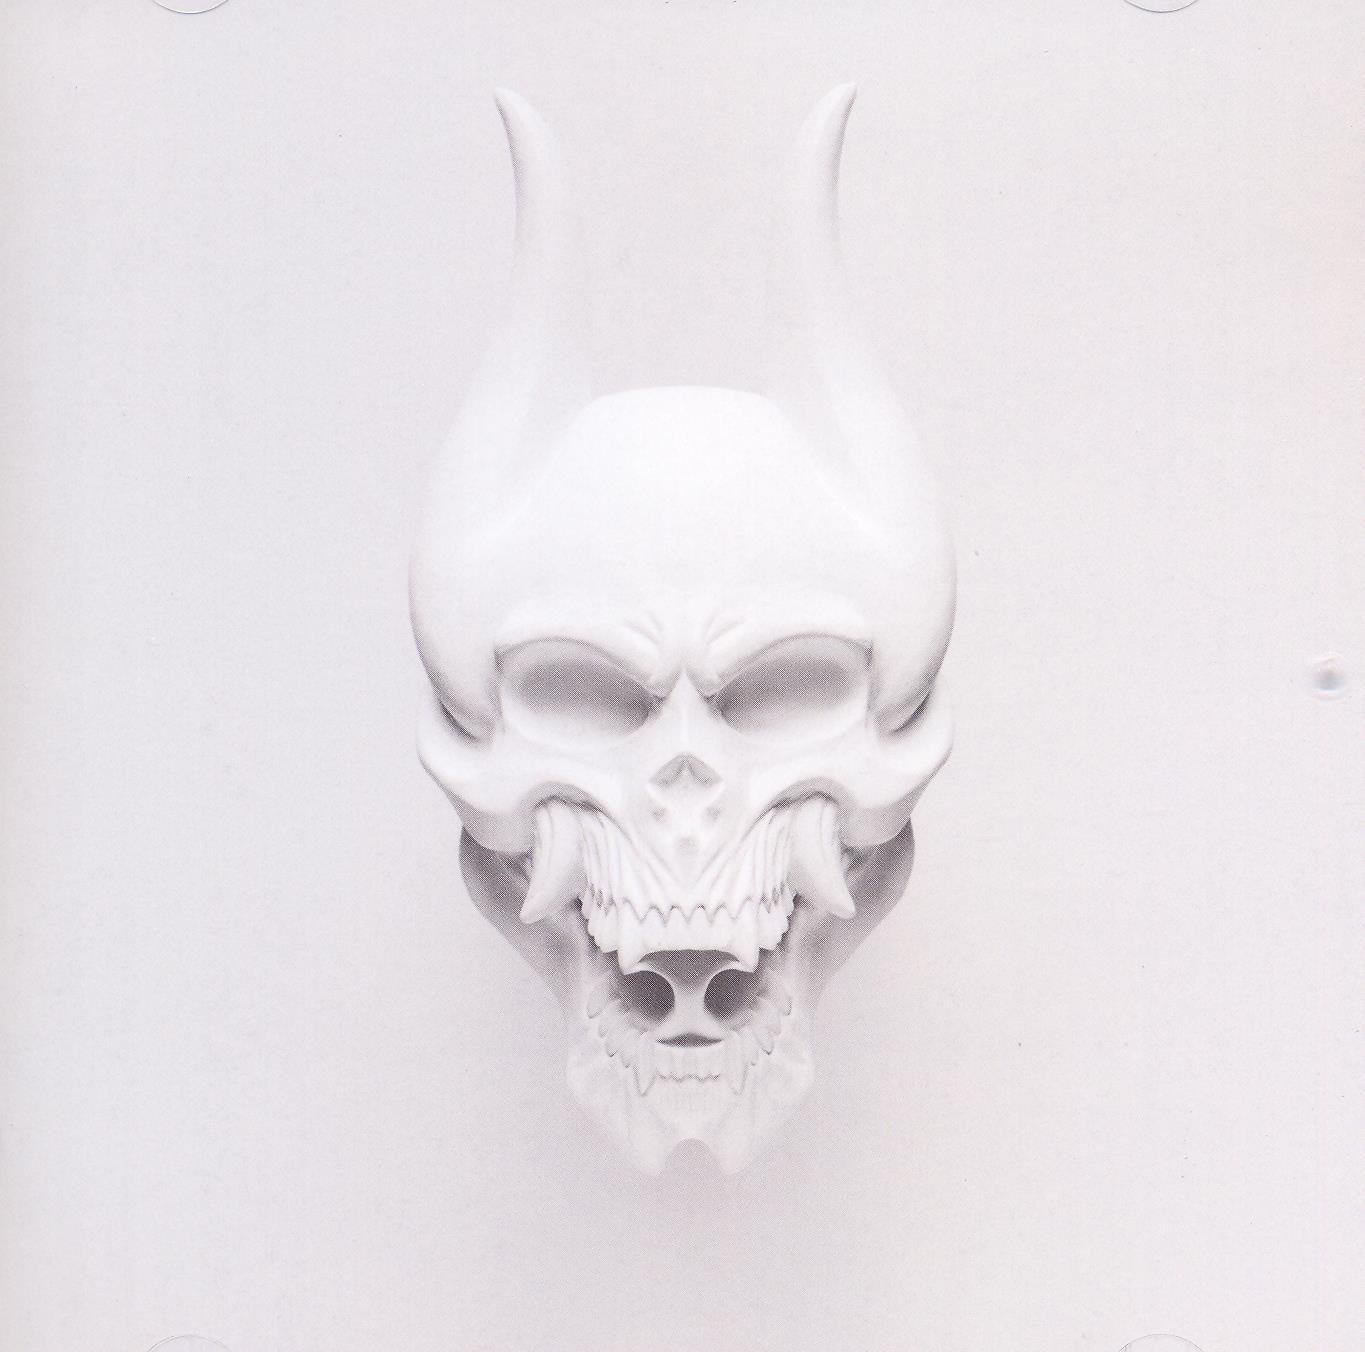 Trivium "Silence In The Snow" Ltd CD